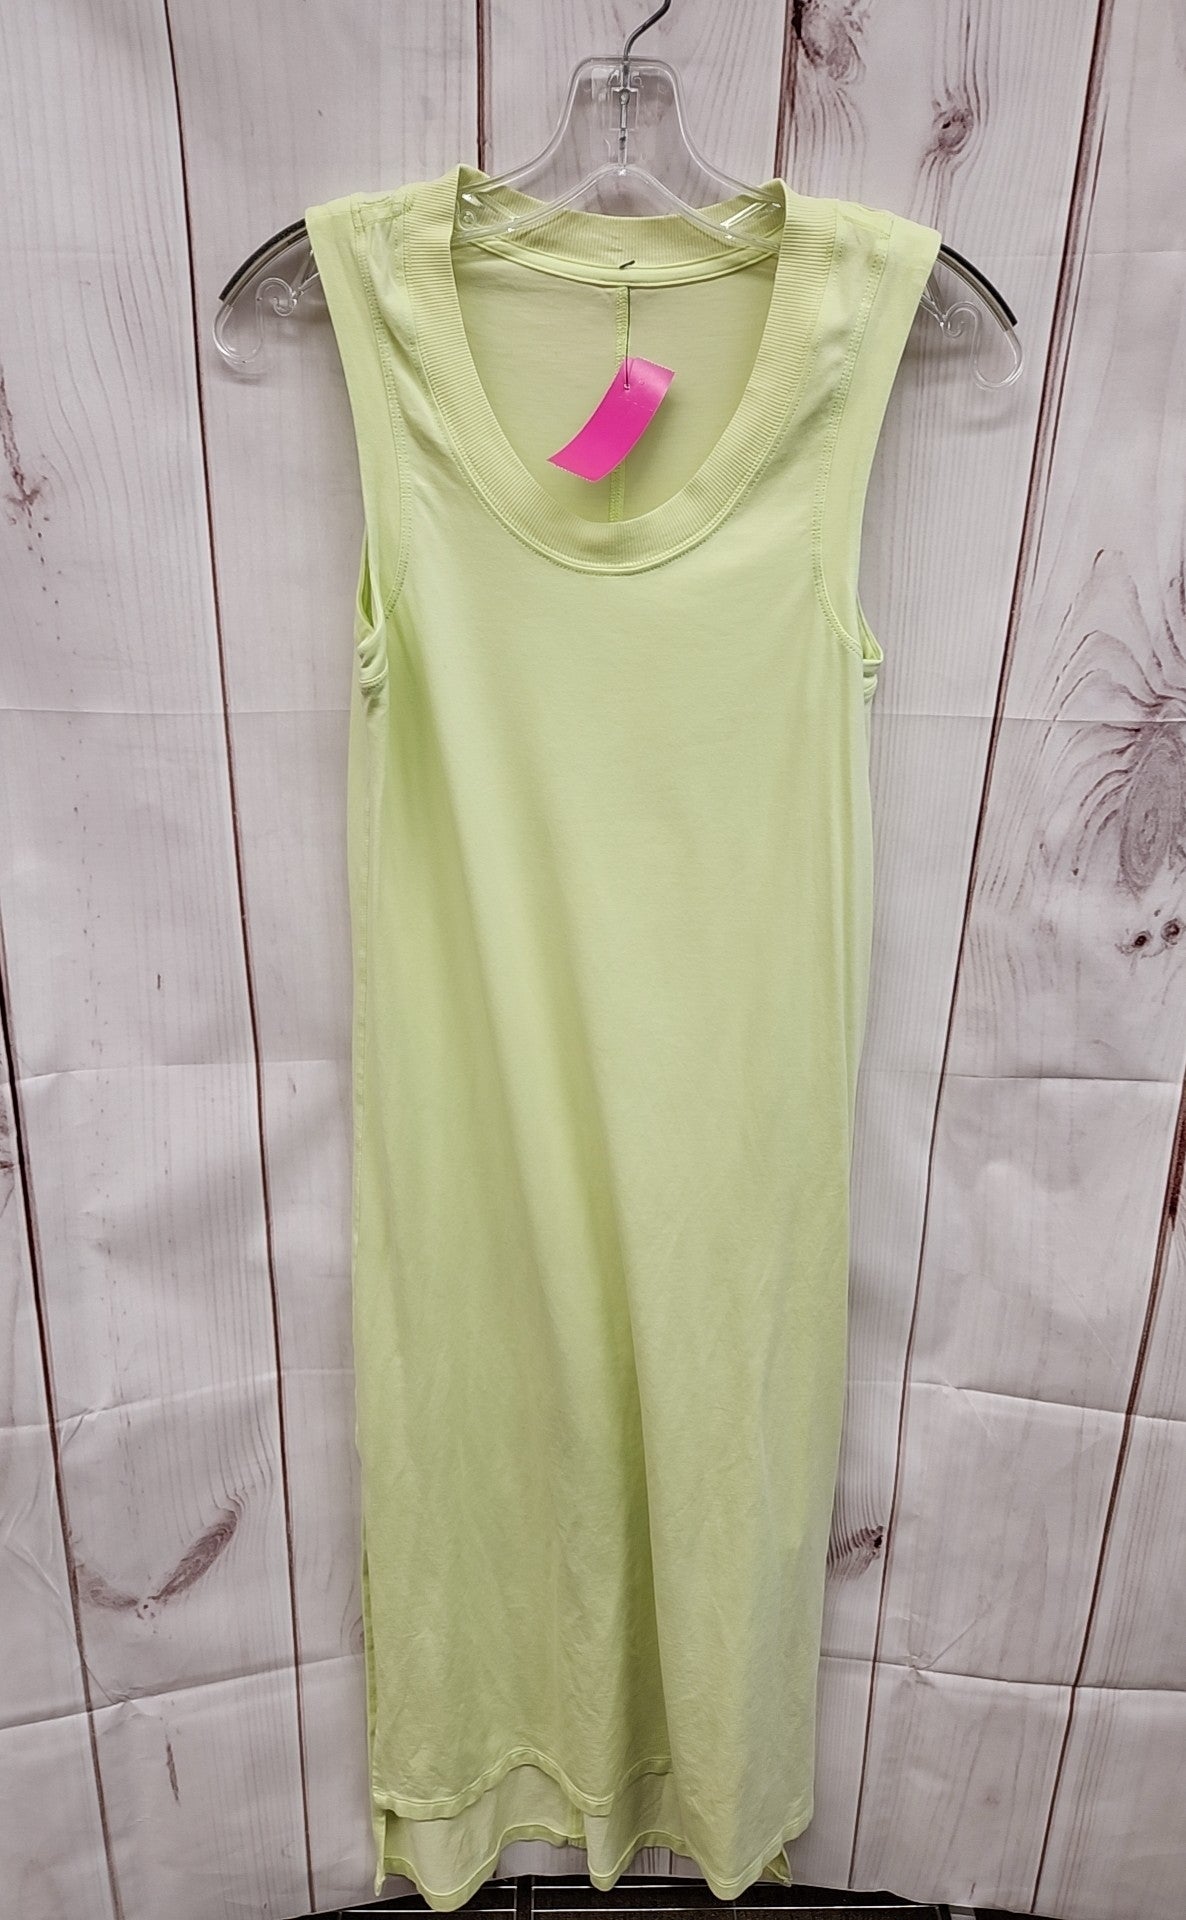 Lululemon Women's Size S Lime Green Dress